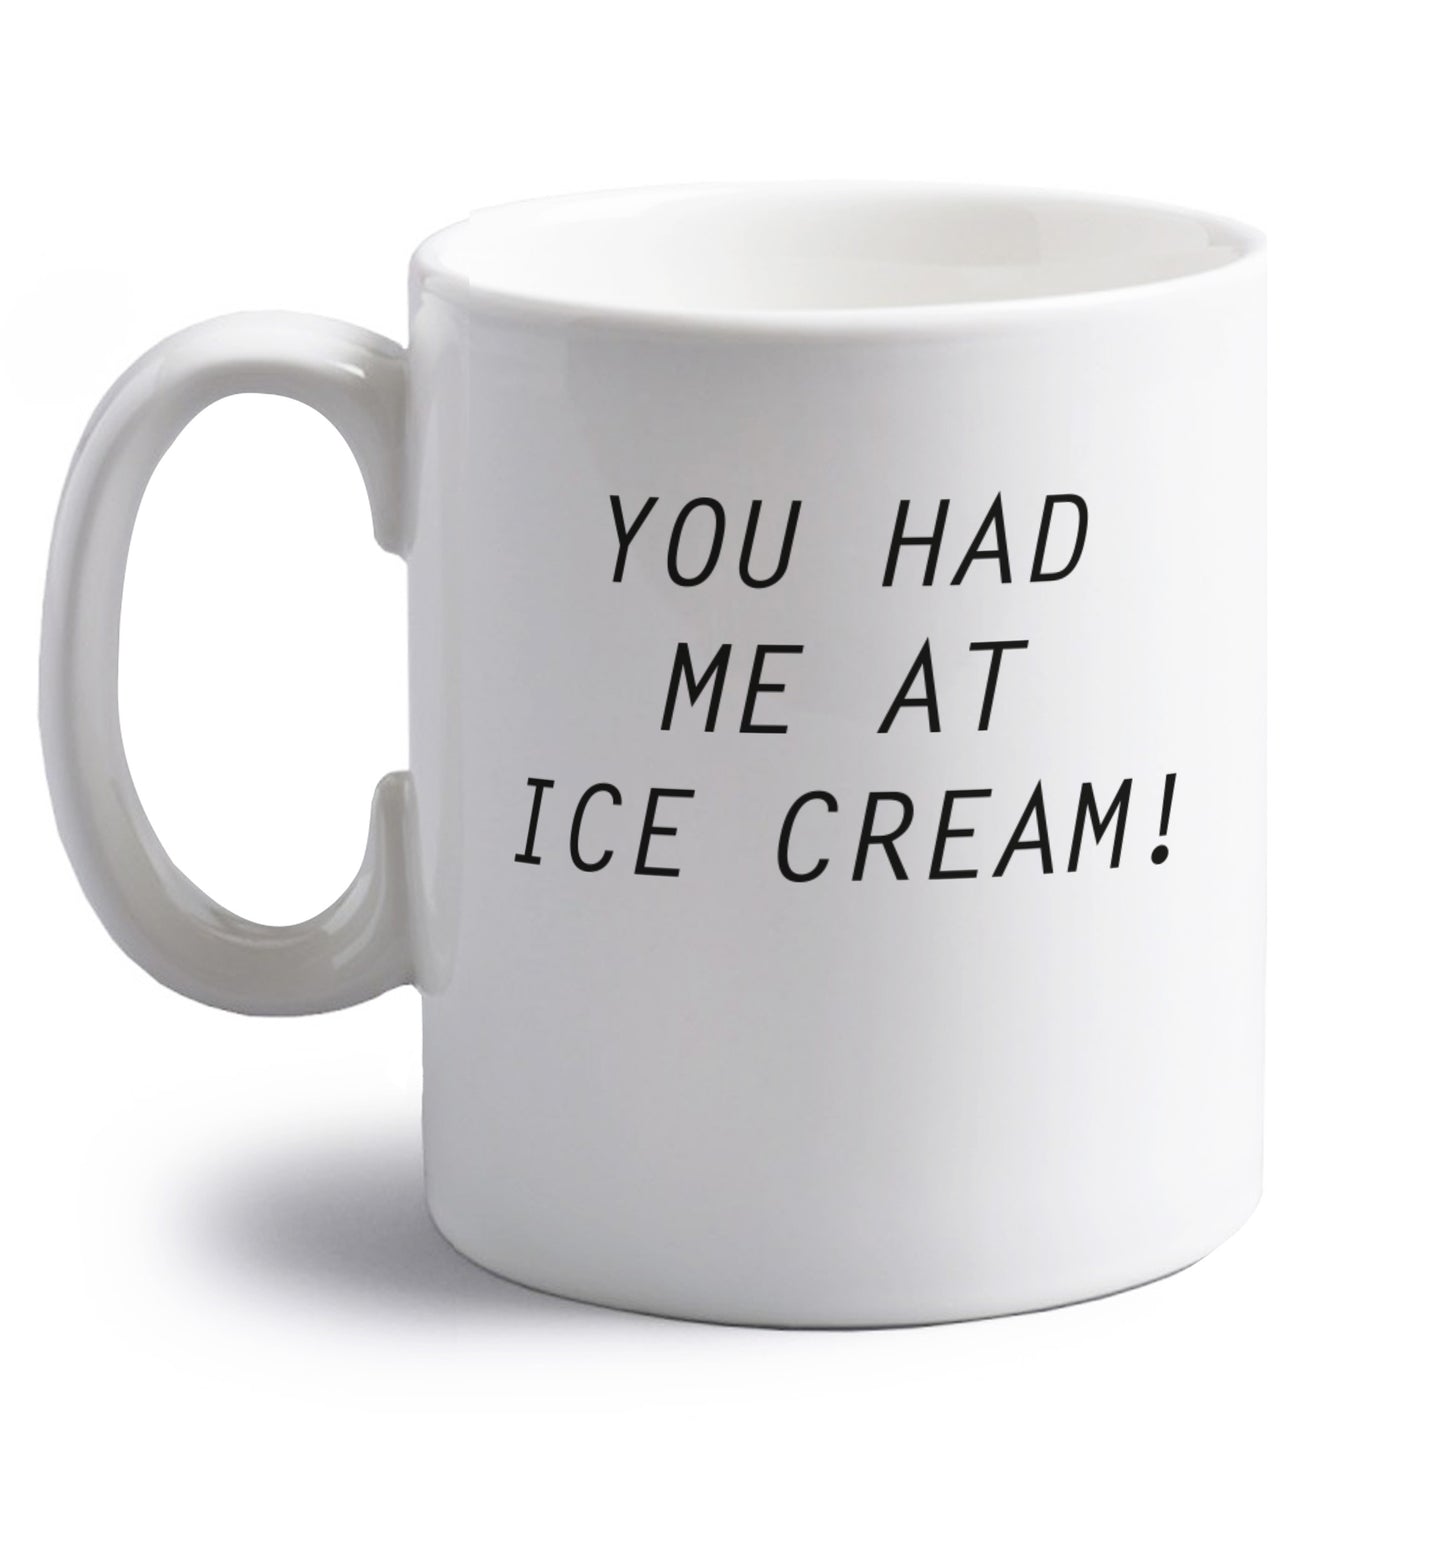 You had me at ice cream right handed white ceramic mug 